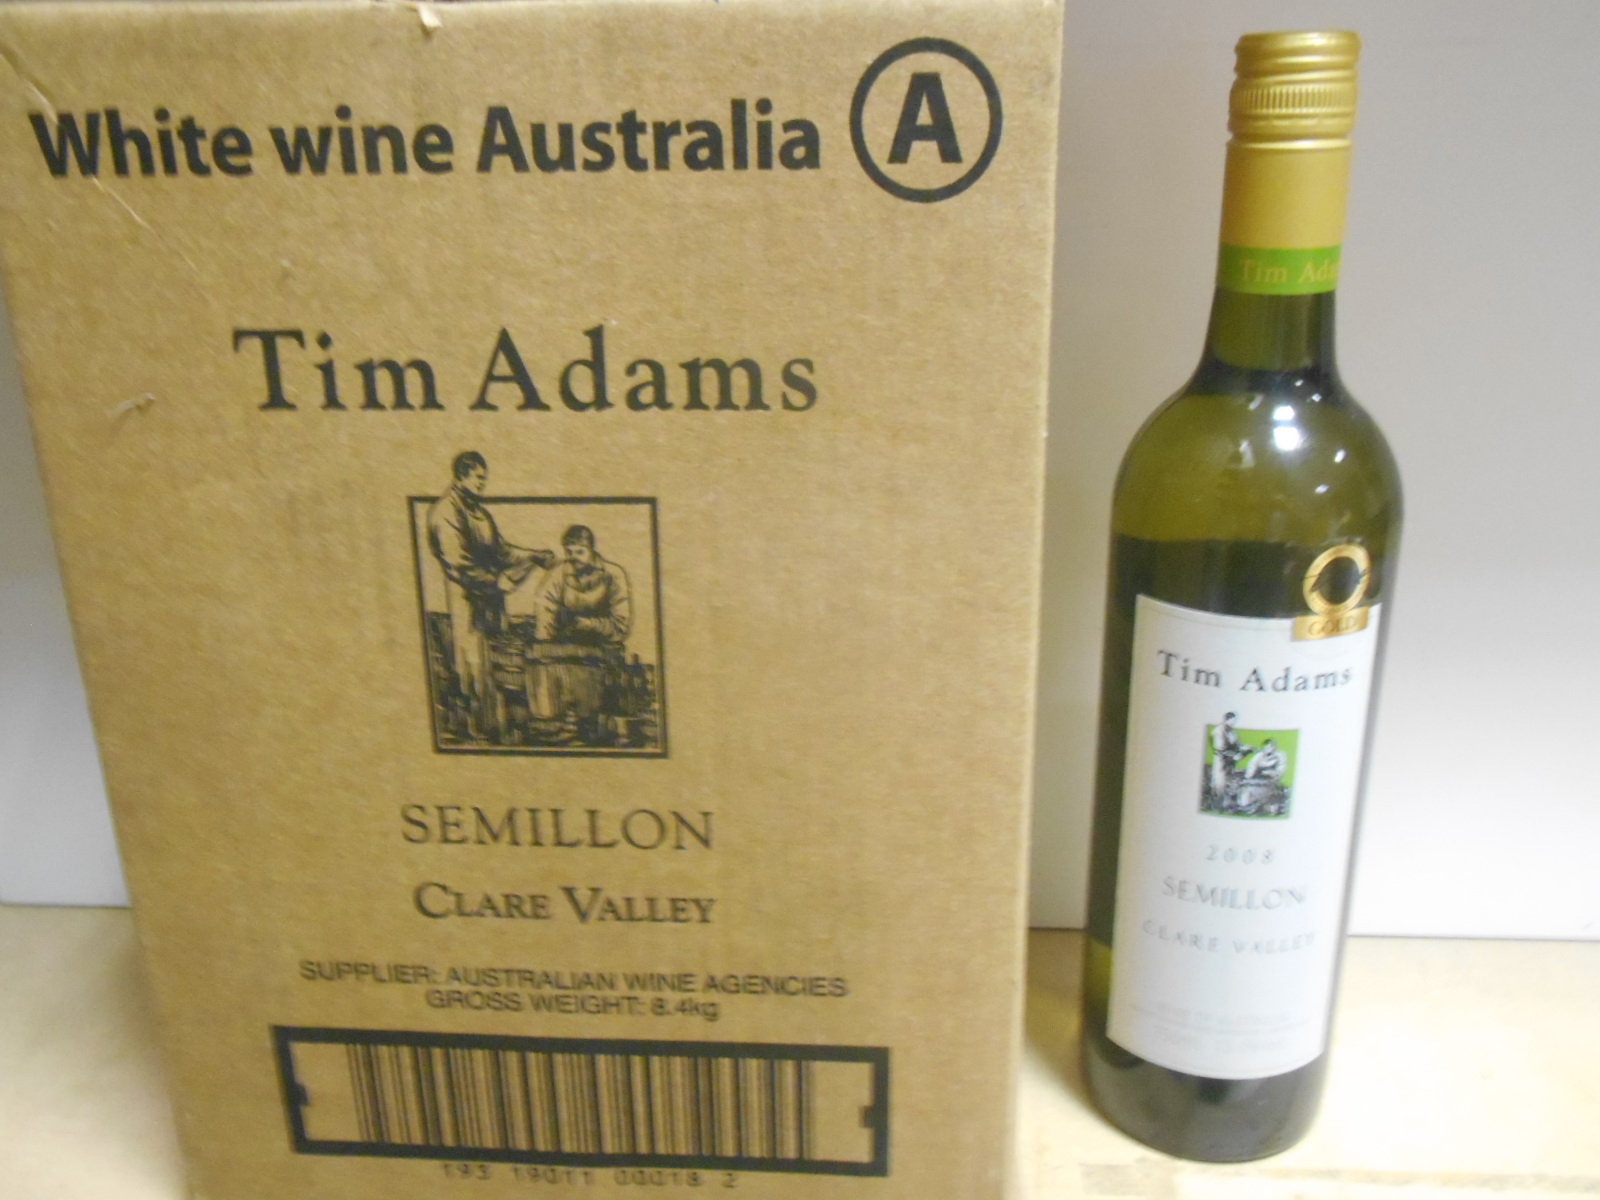 Tim Adams, Clare Valley Semillon 2008, 12 bottles